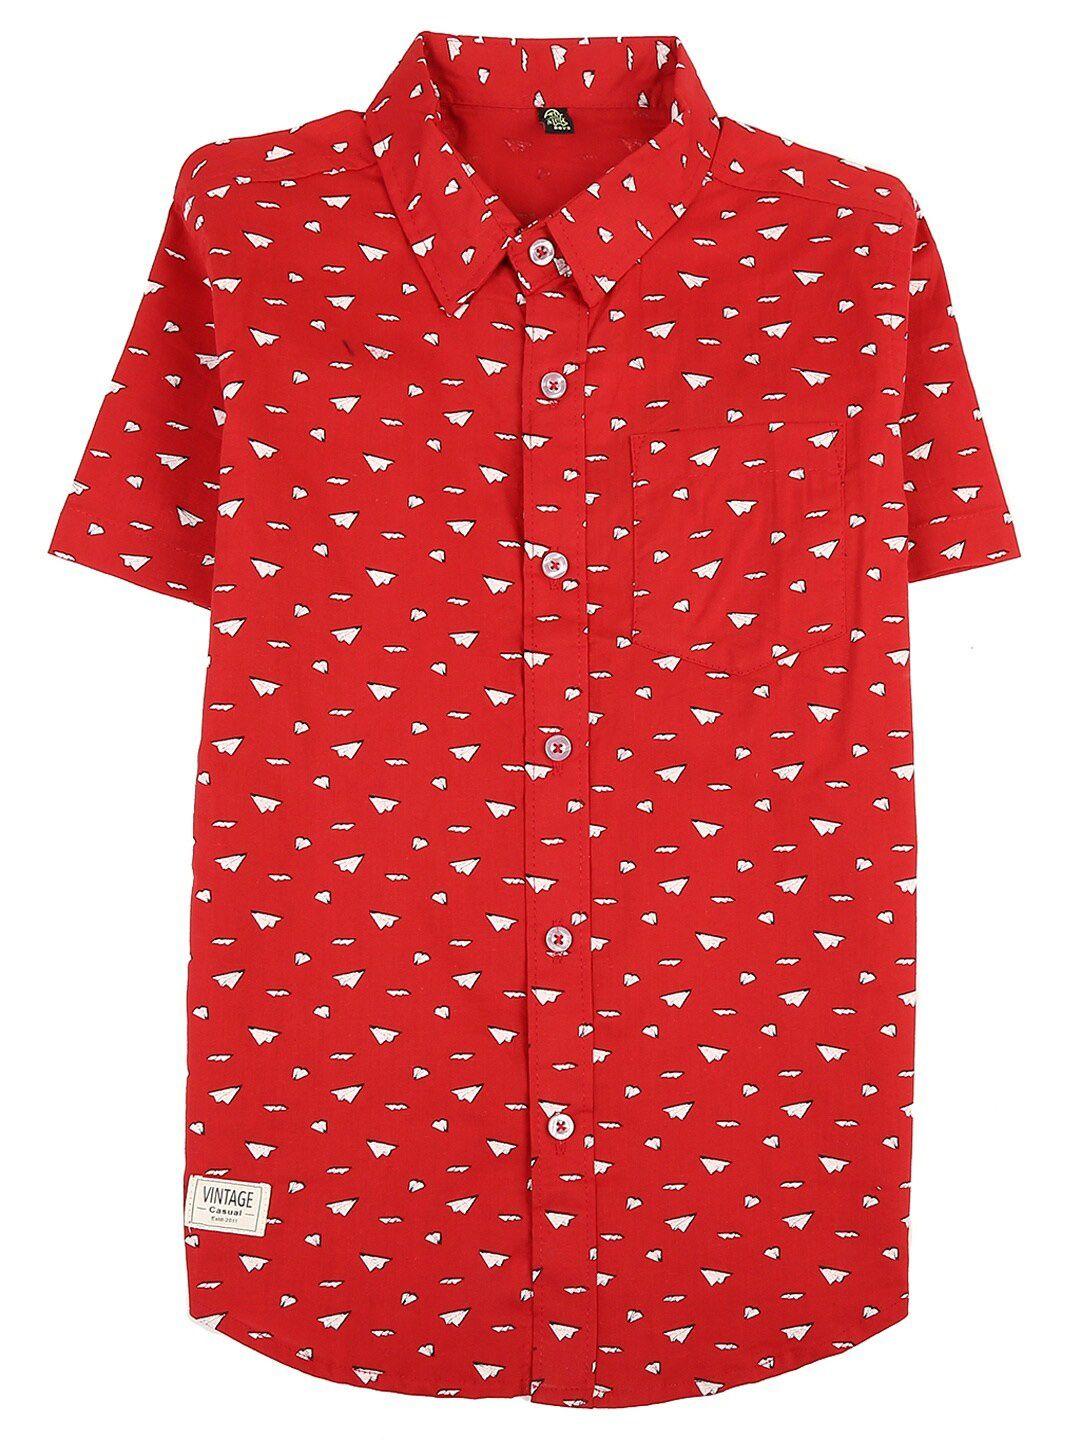 v-mart boys red classic printed casual shirt